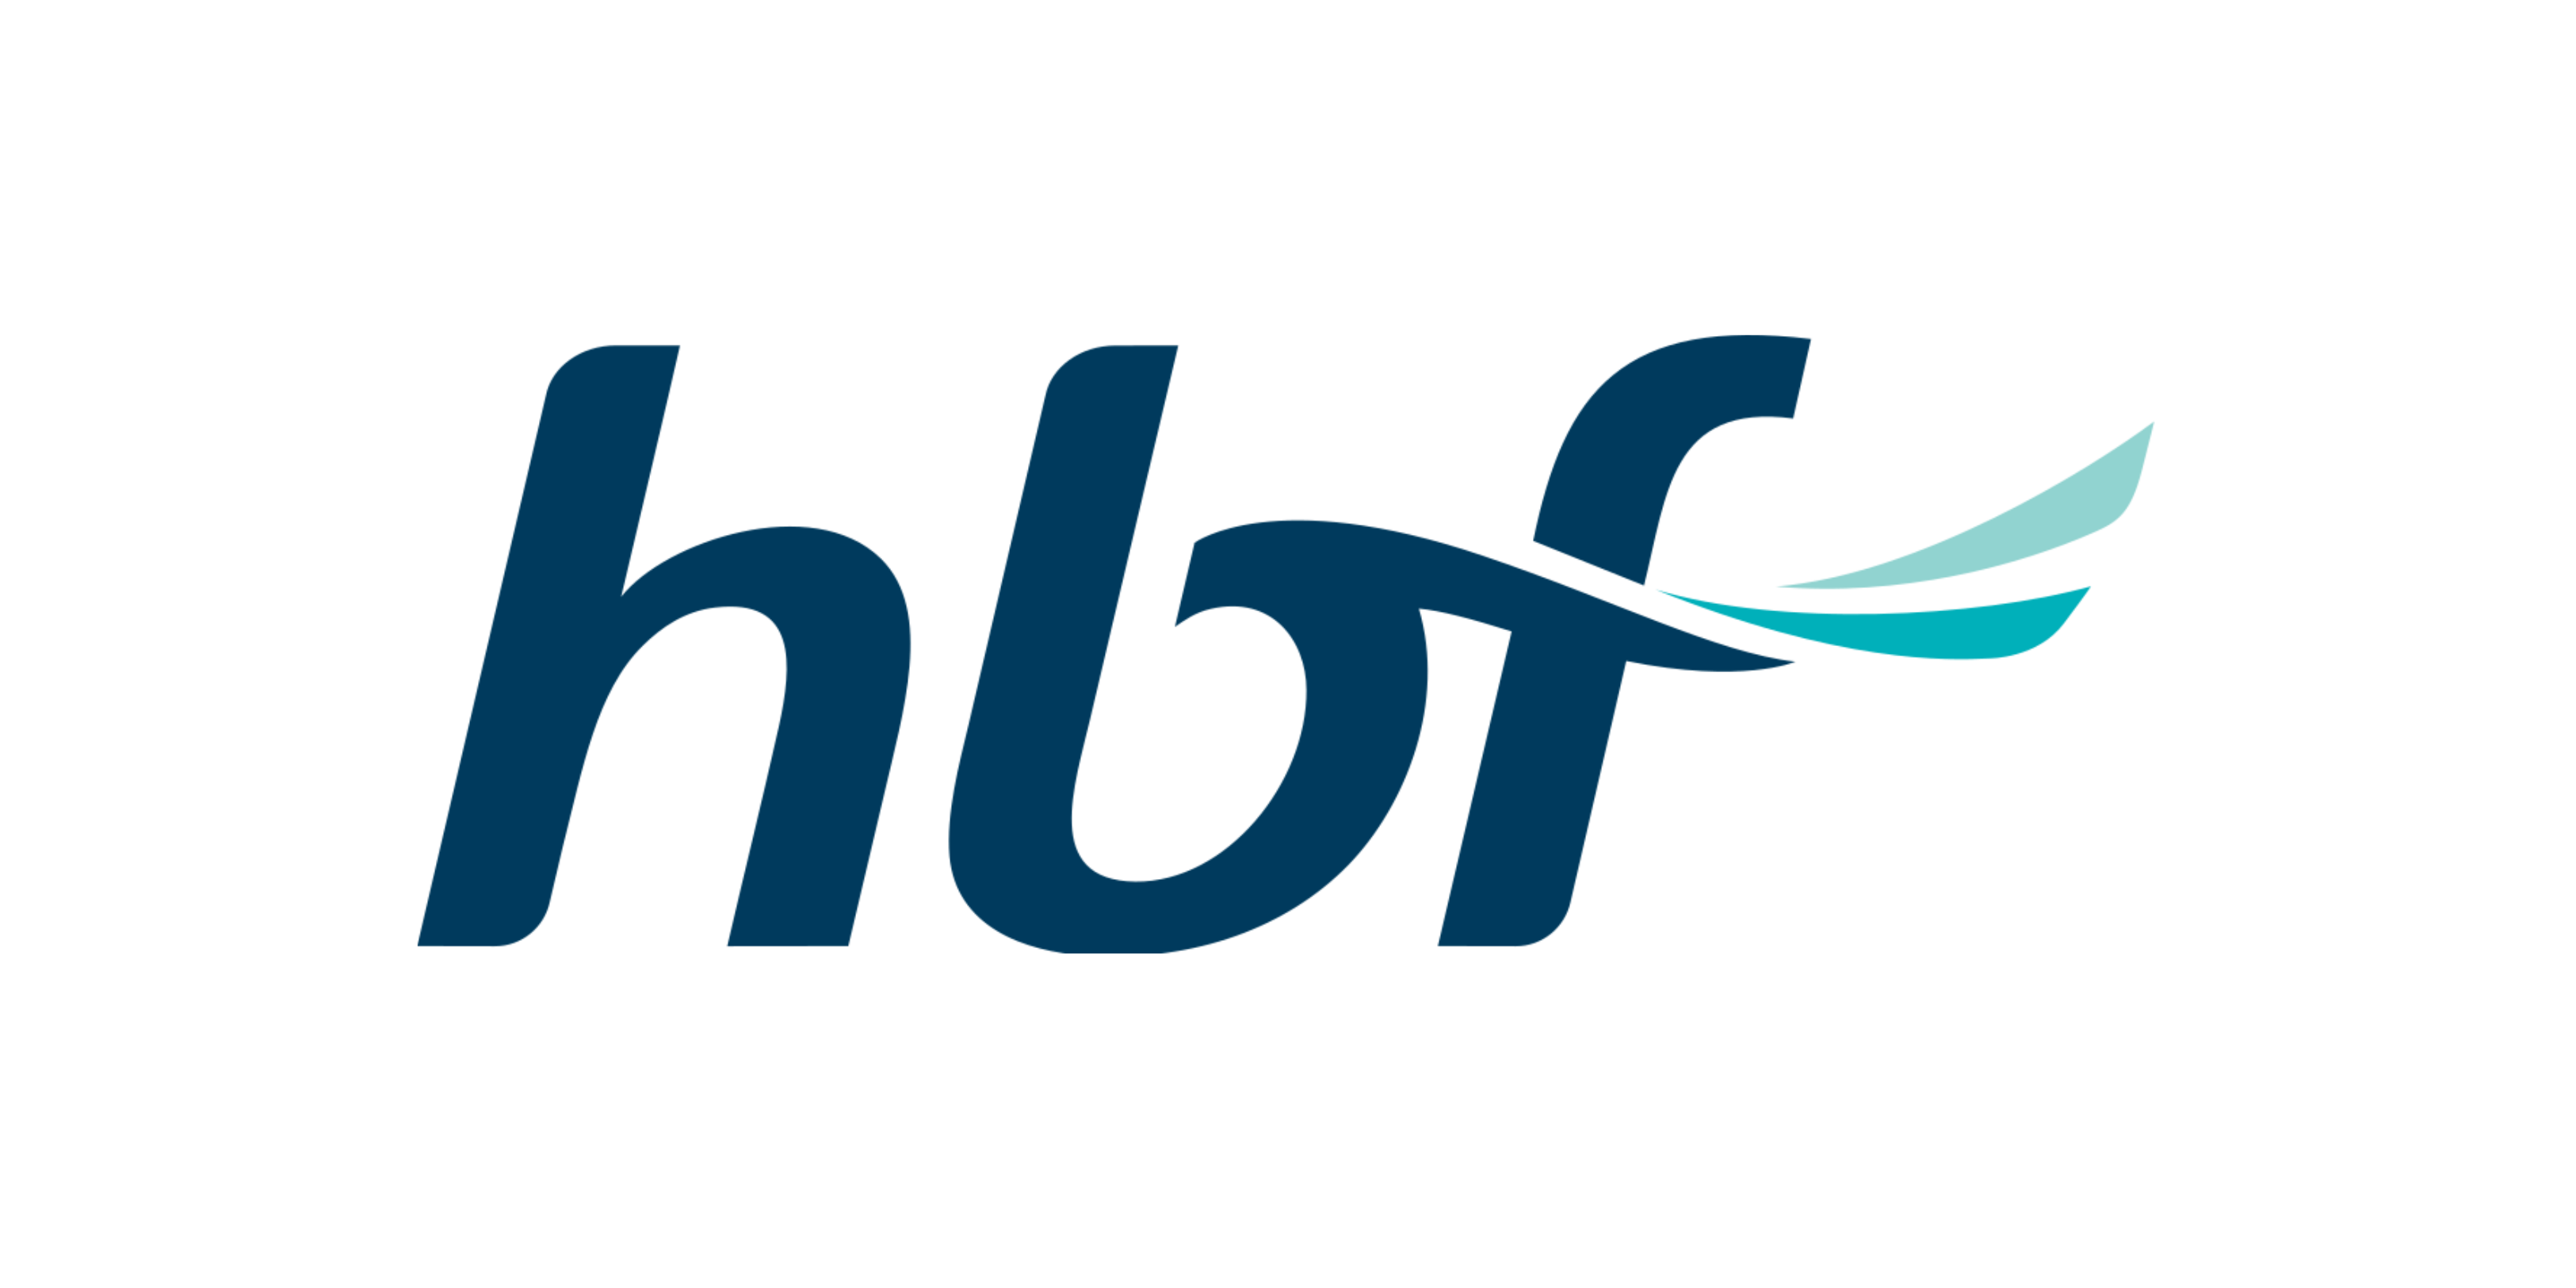 A photo of hbf logo